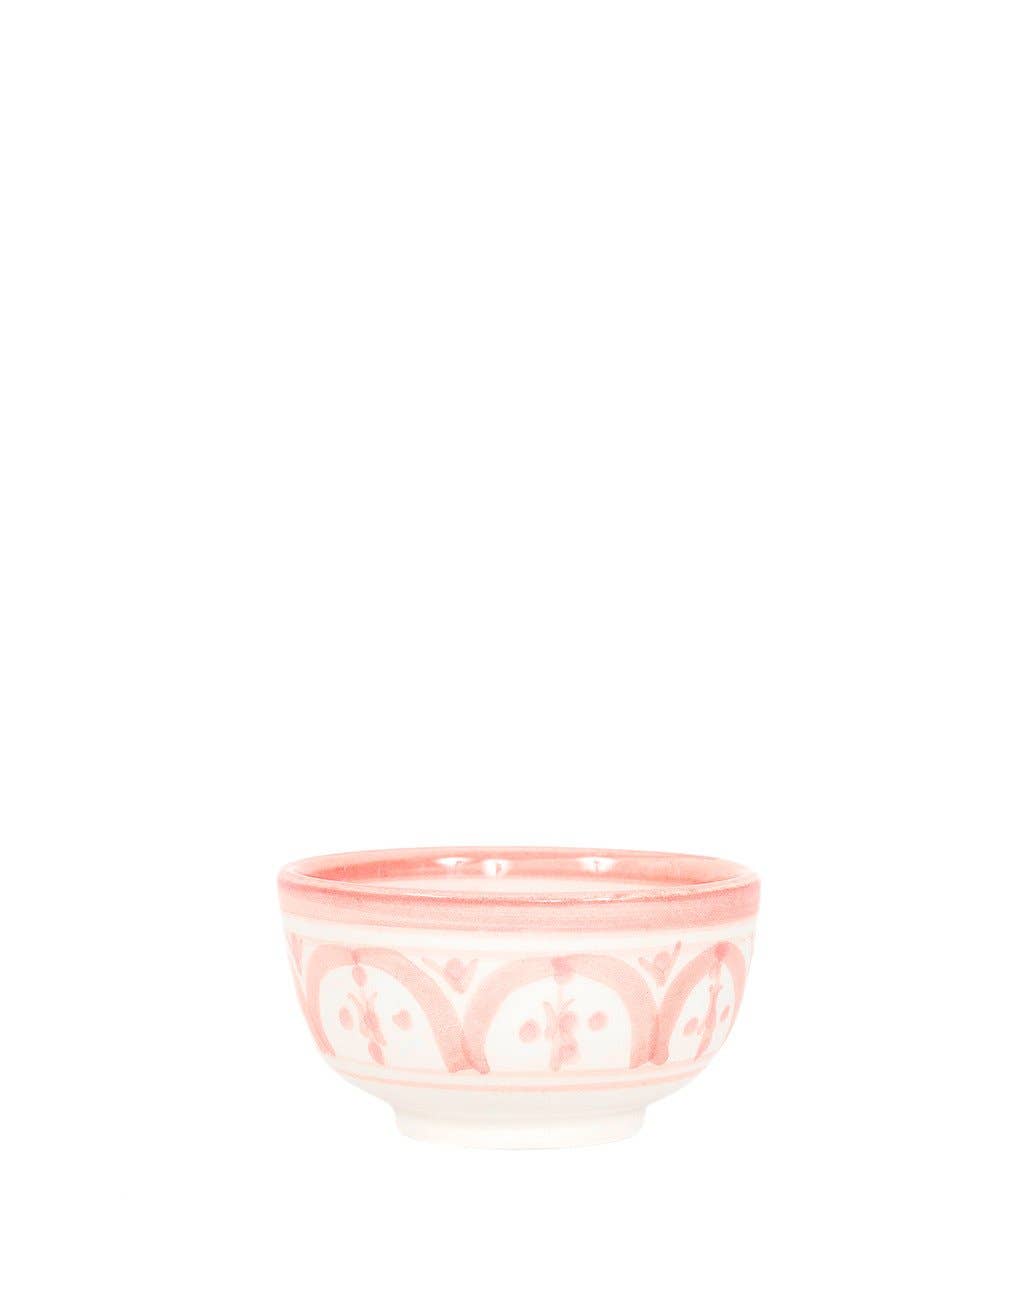 Ceramic Condiment Bowl - 2 styles